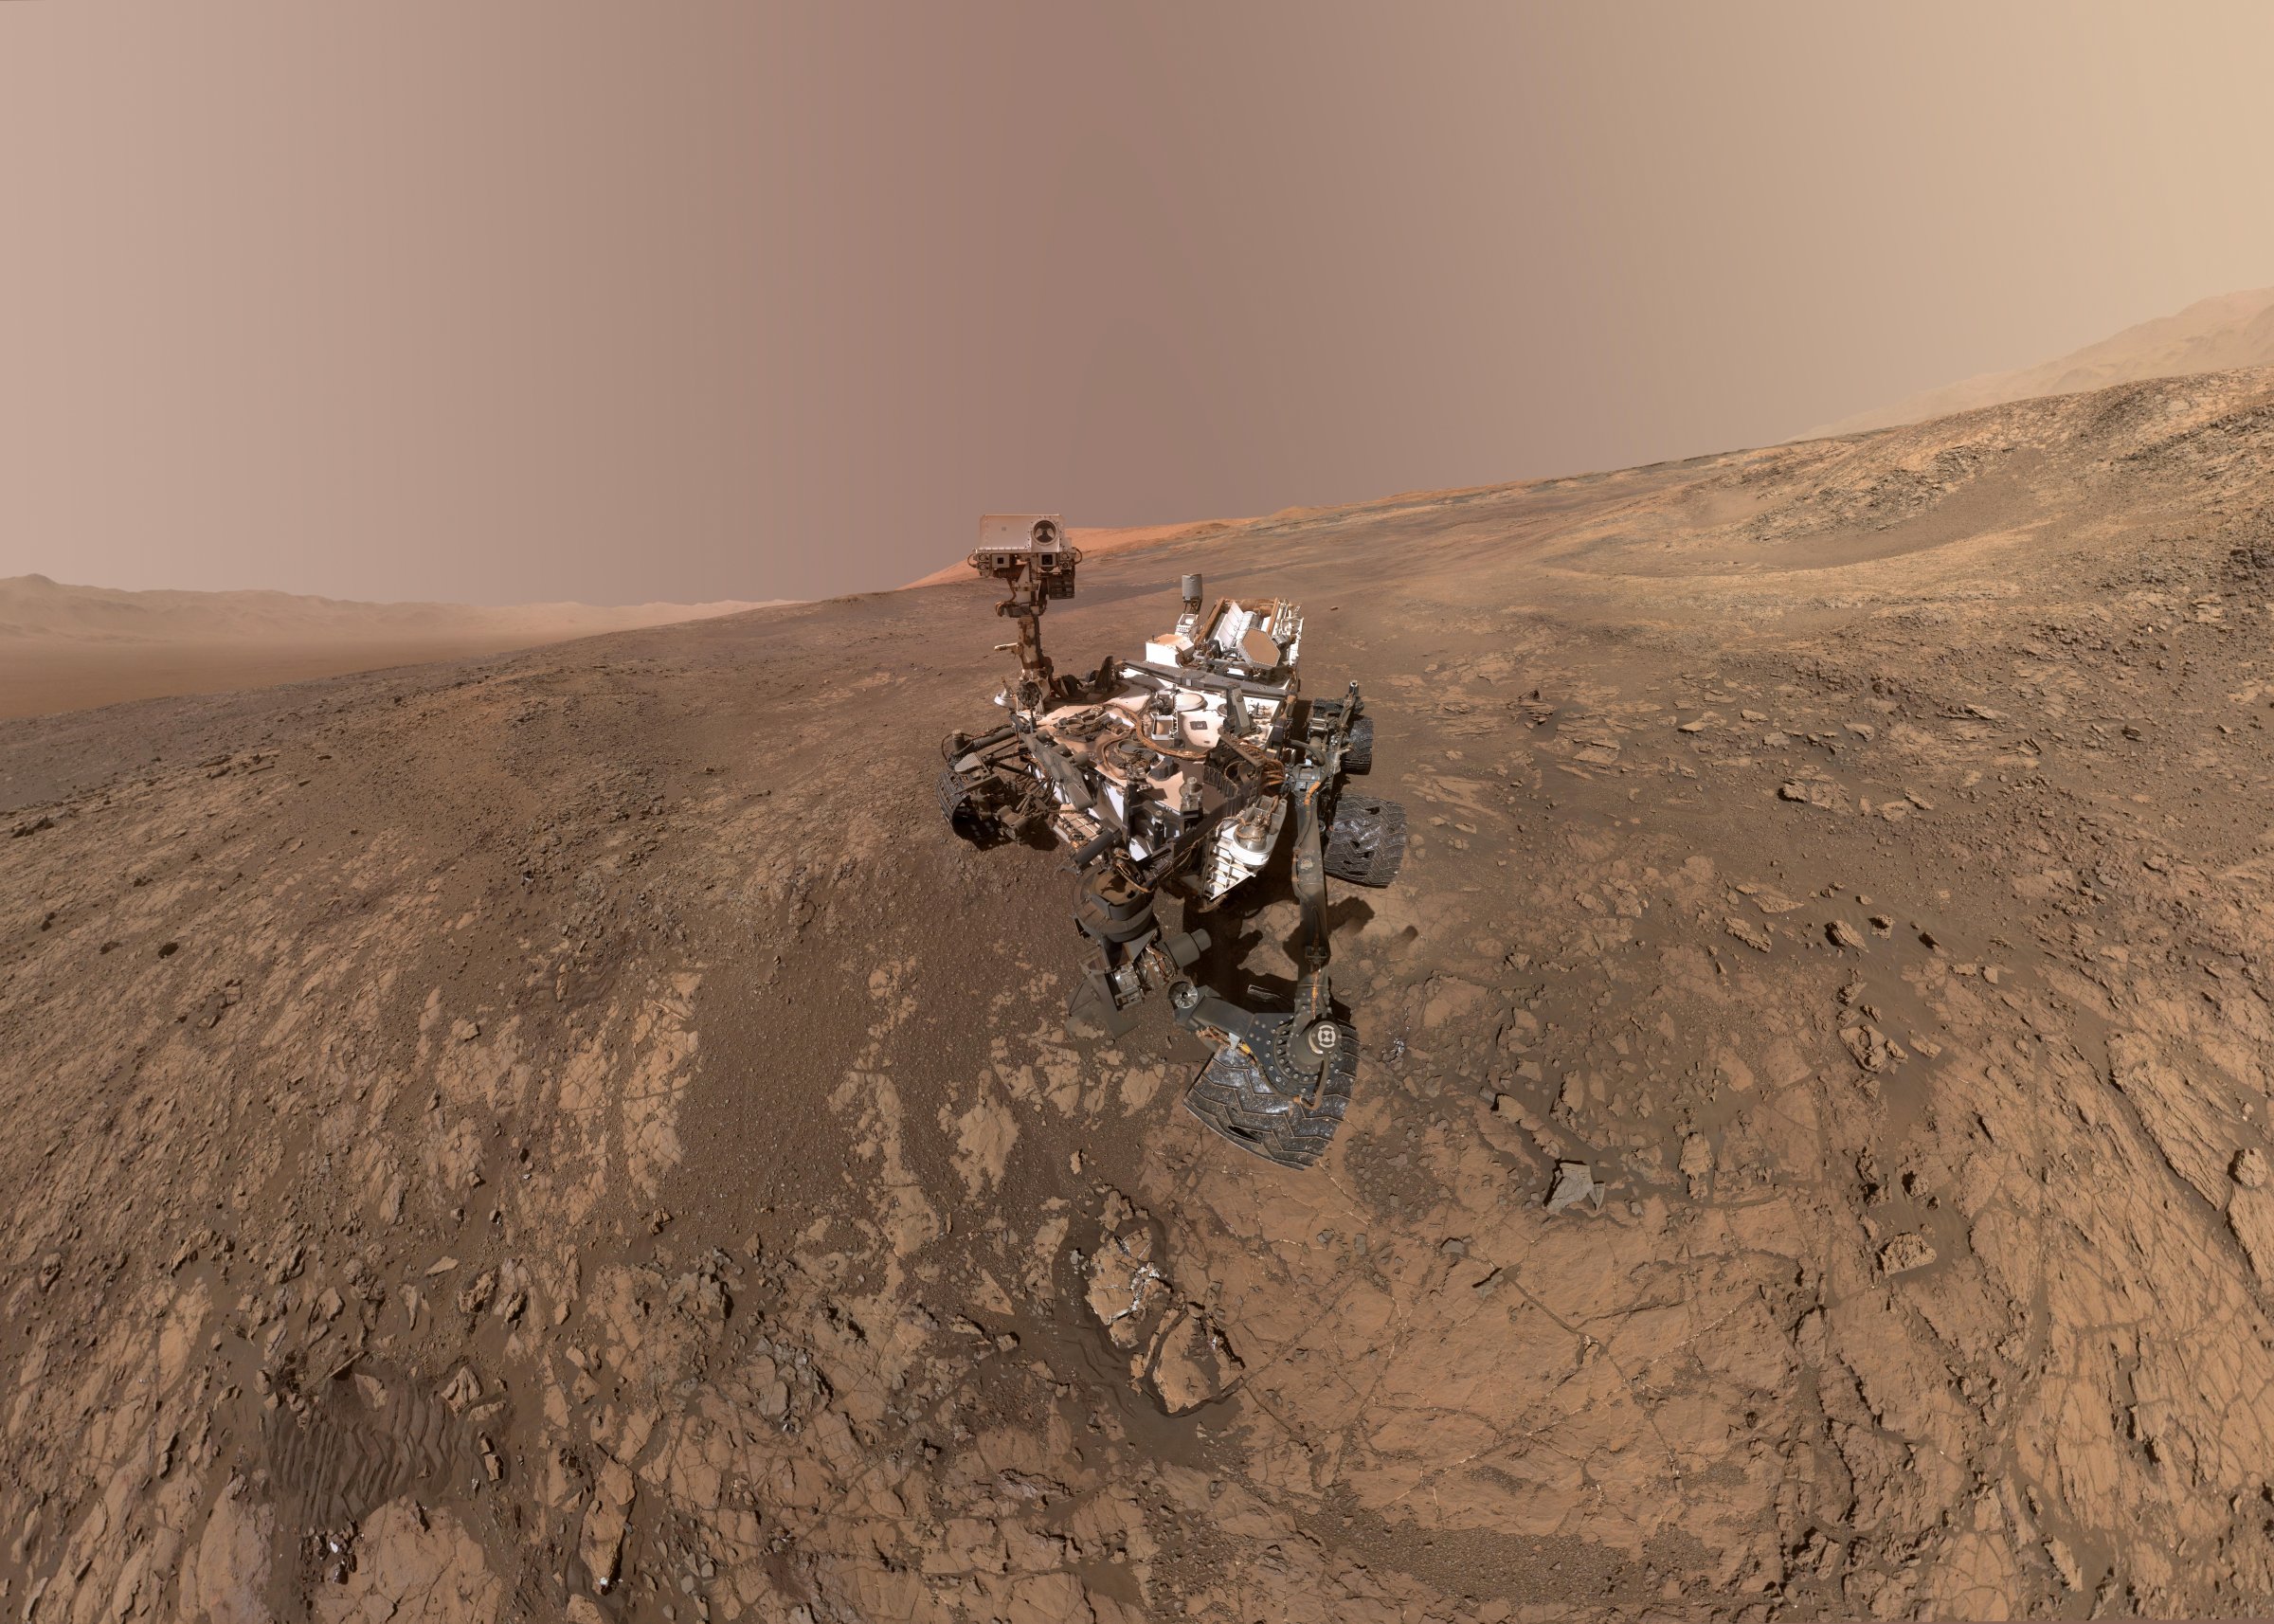 self-portrait of NASA's Curiosity Mars rover shows the vehicle on Vera Rubin Ridge